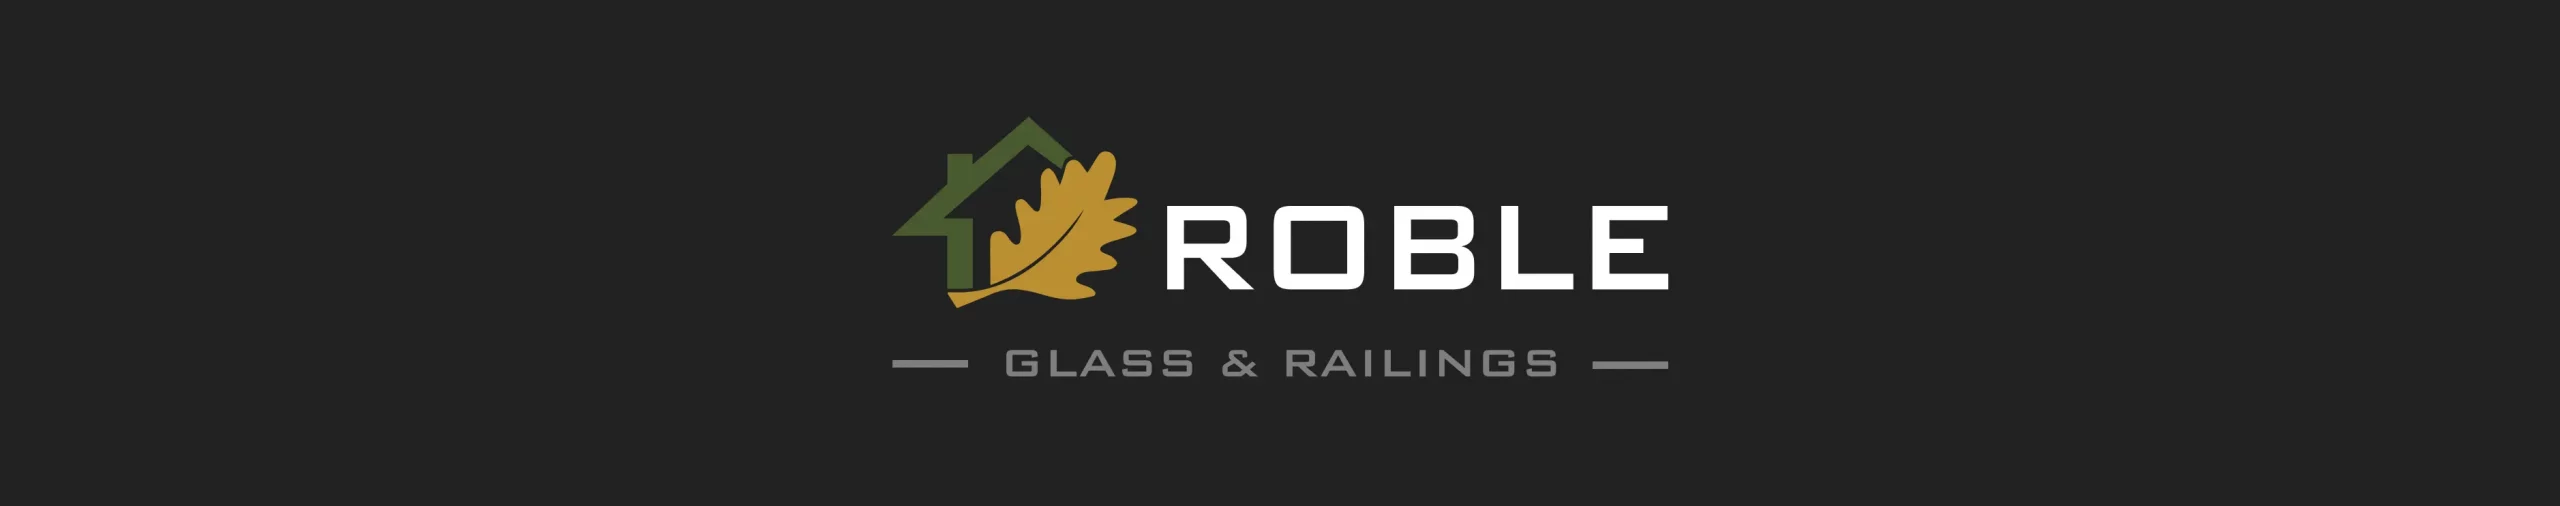 Roble Glass & Railings